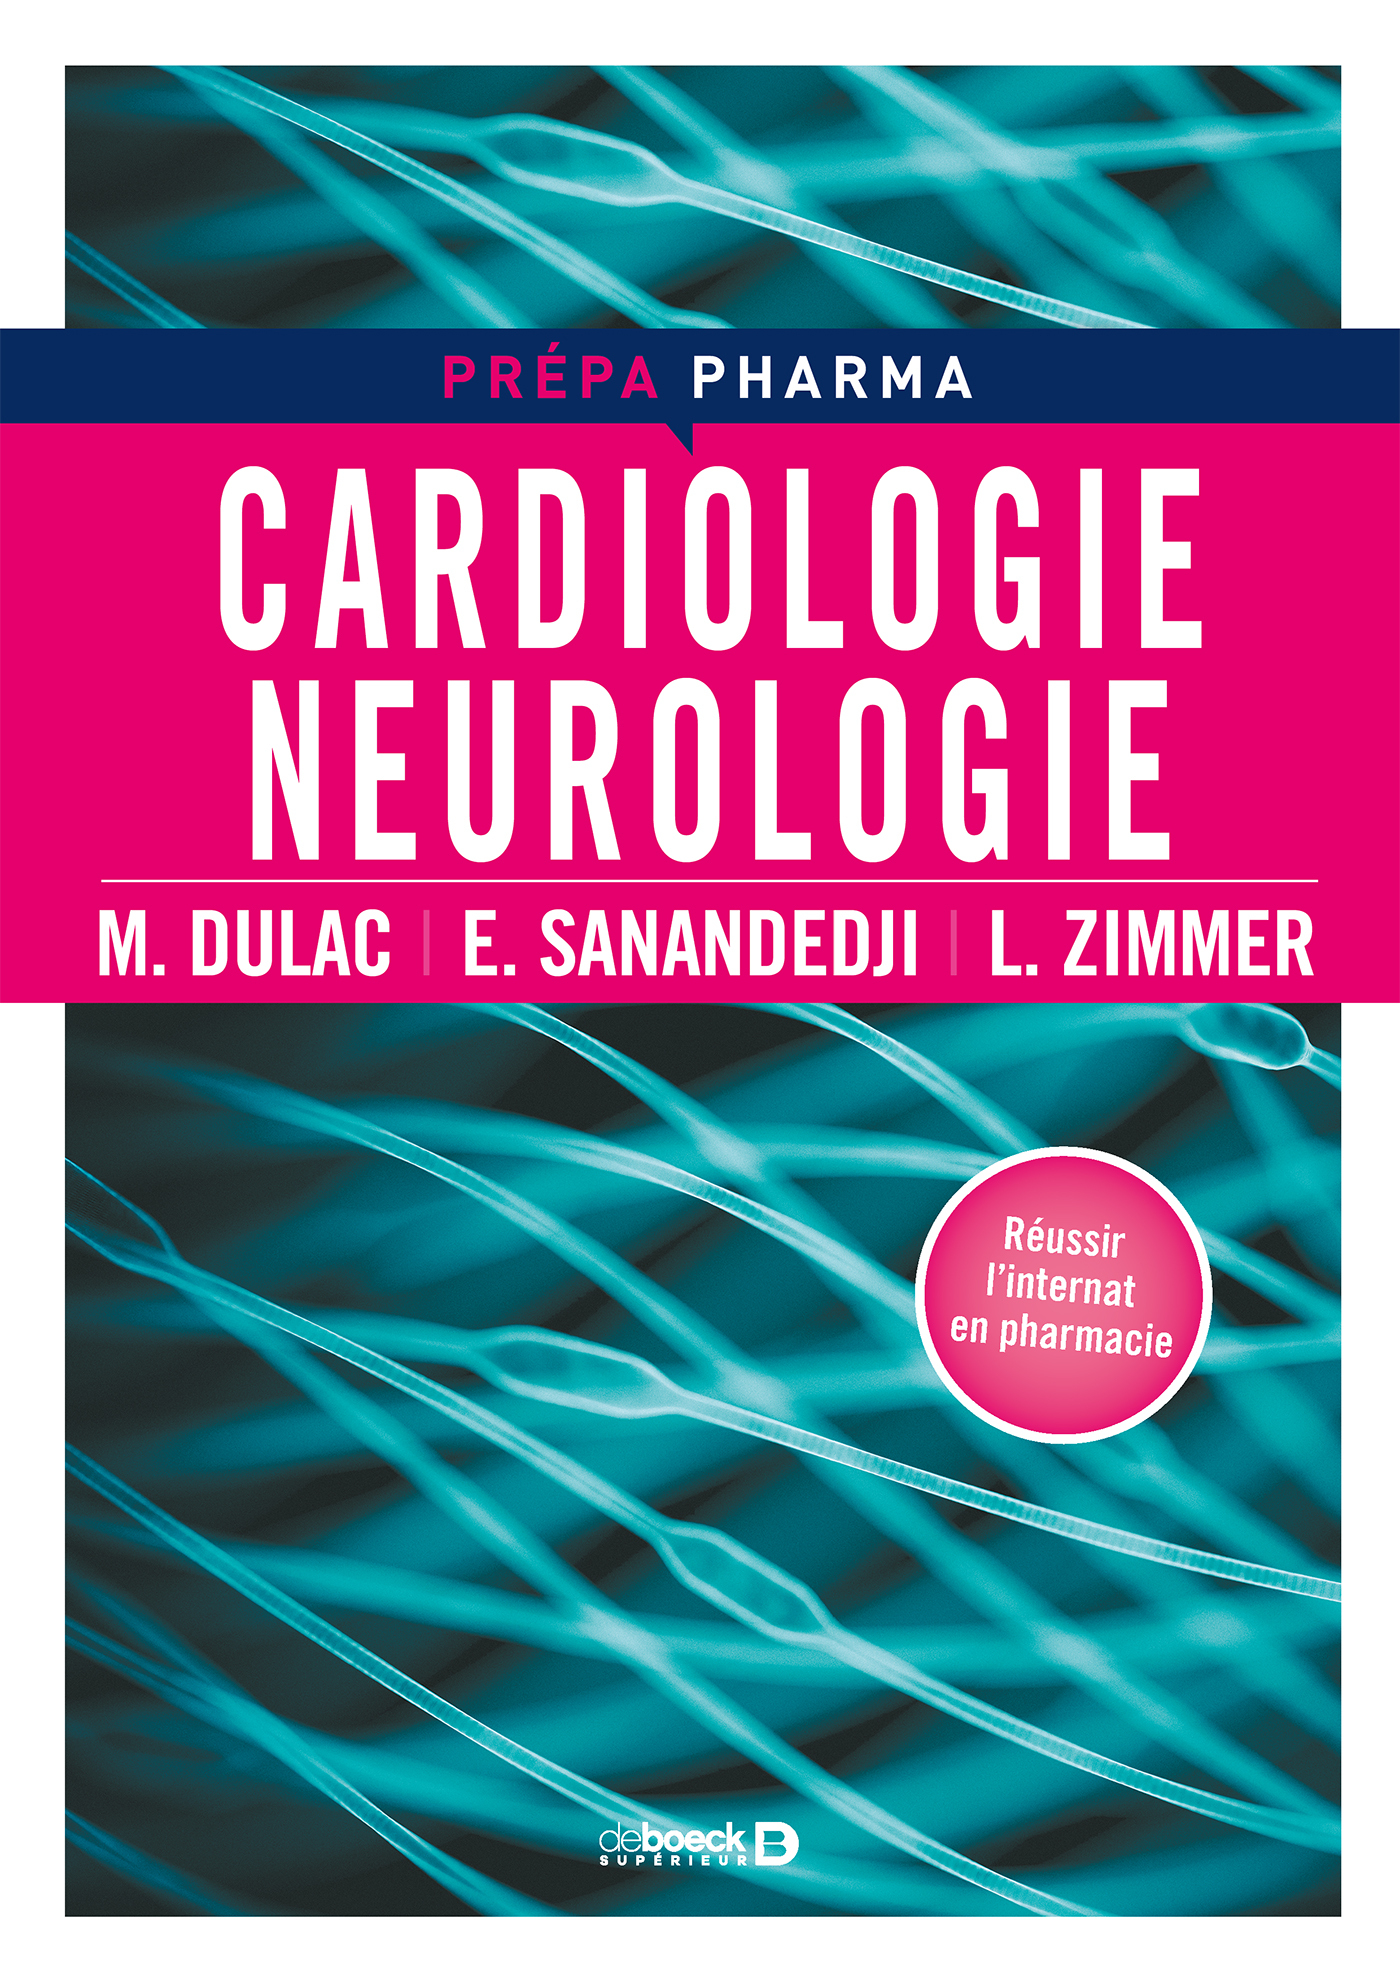 Cardiologie et neurologie (9782807320611-front-cover)